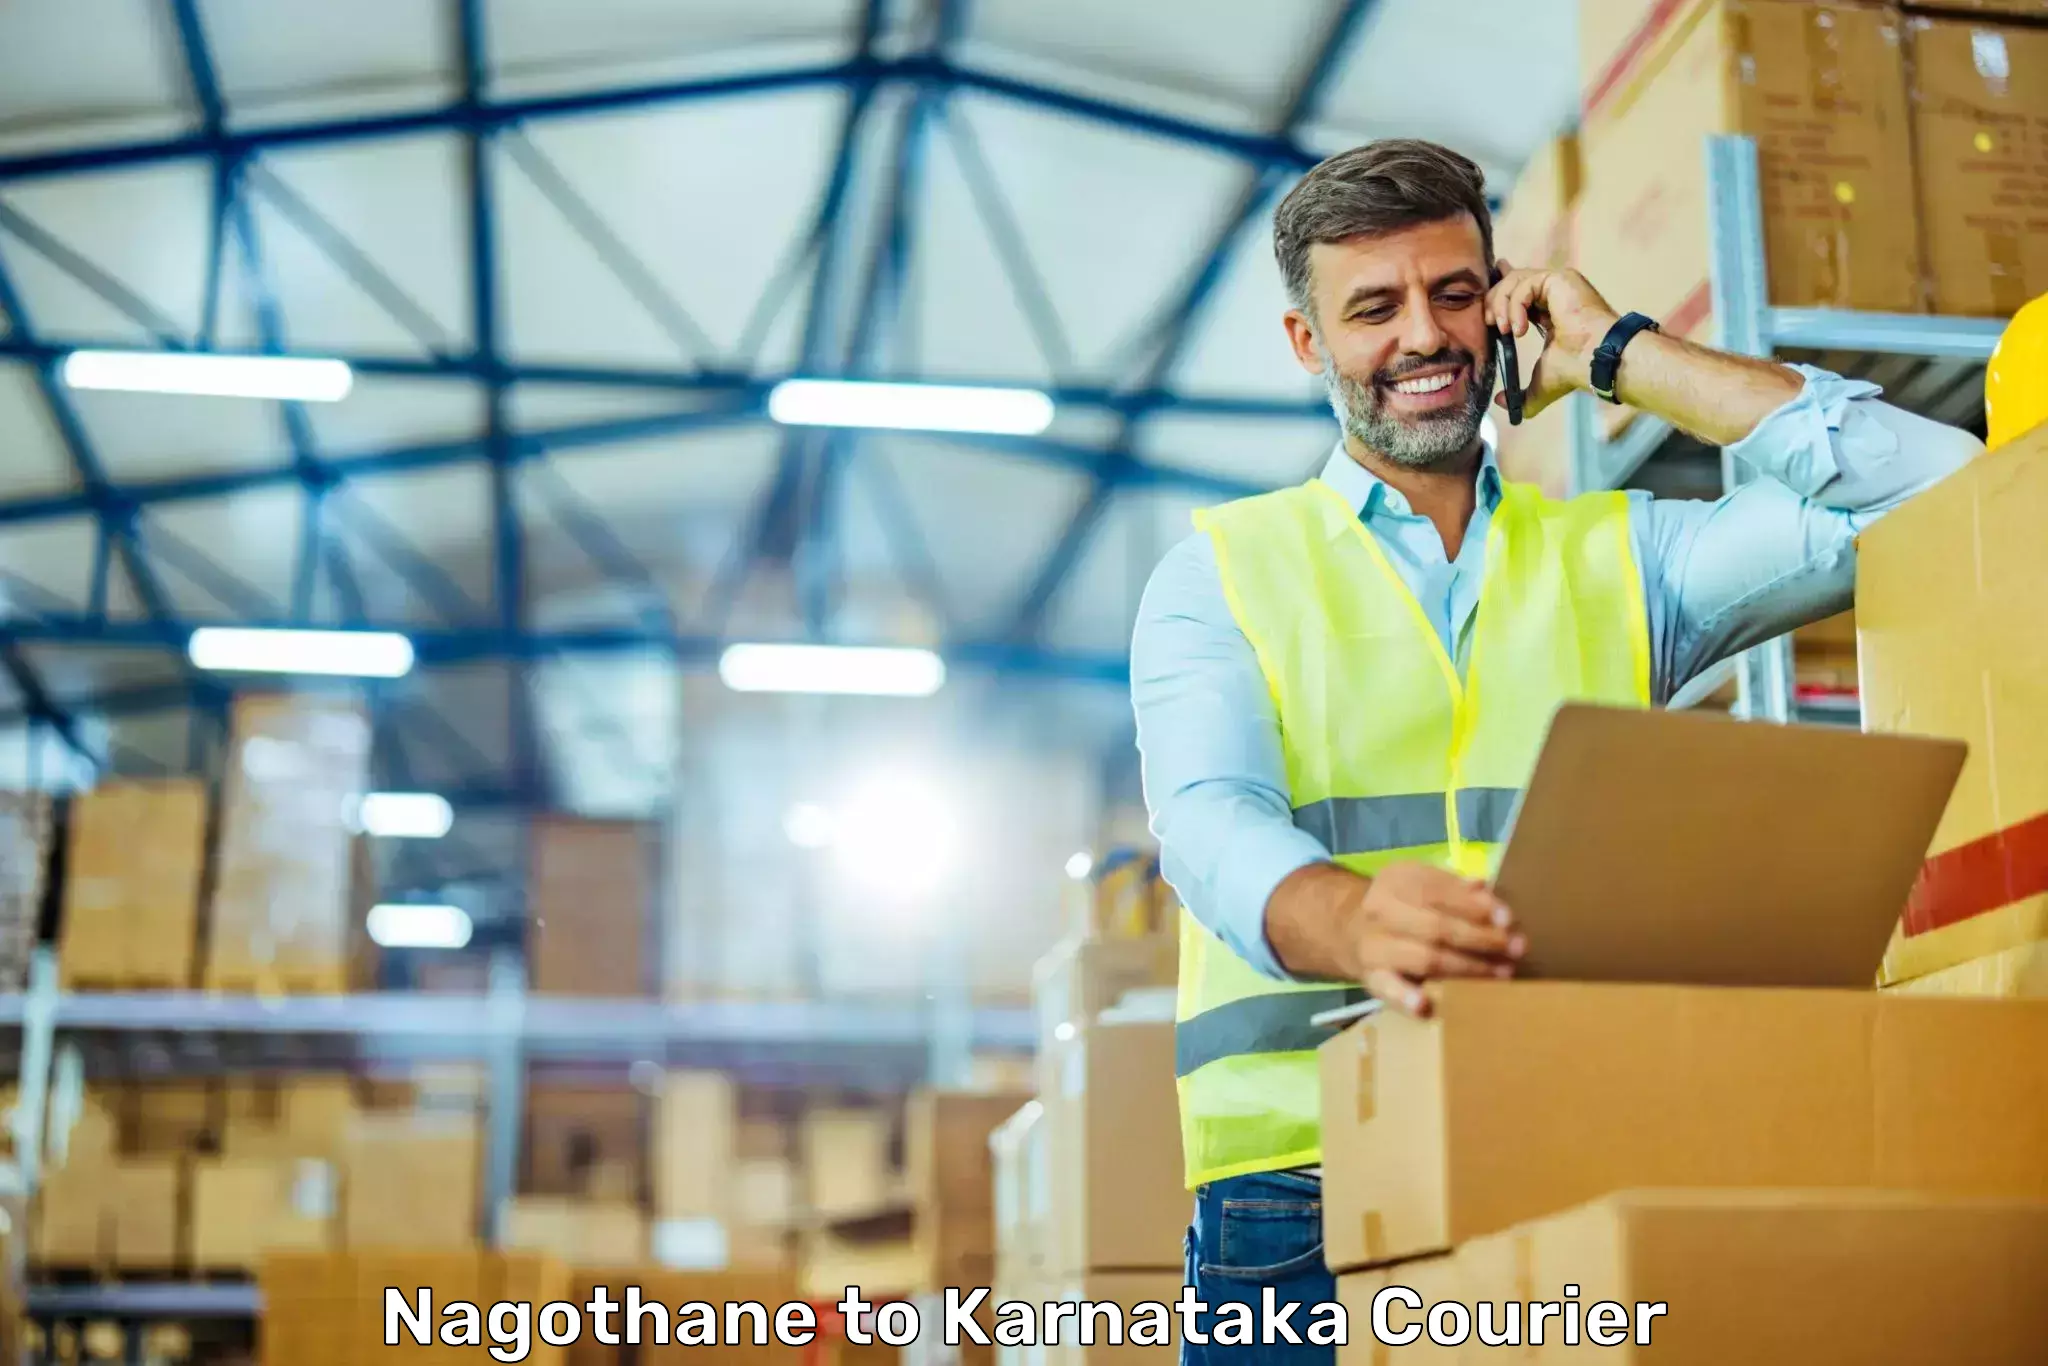 Courier service innovation Nagothane to Ramanathapura